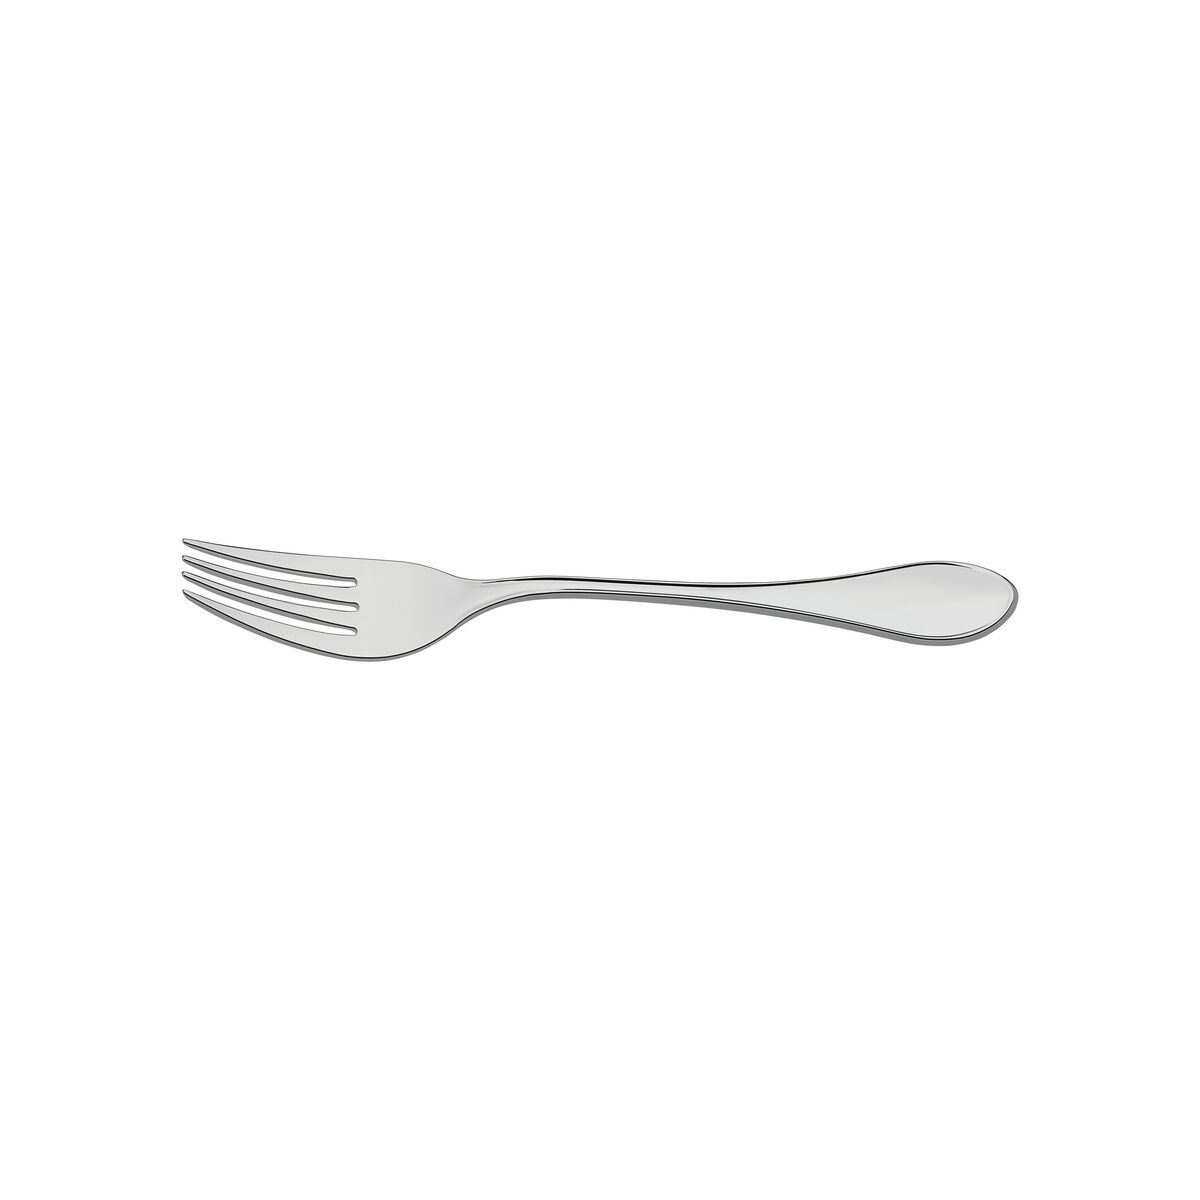 Tramontina Italy stainless steel dinner fork